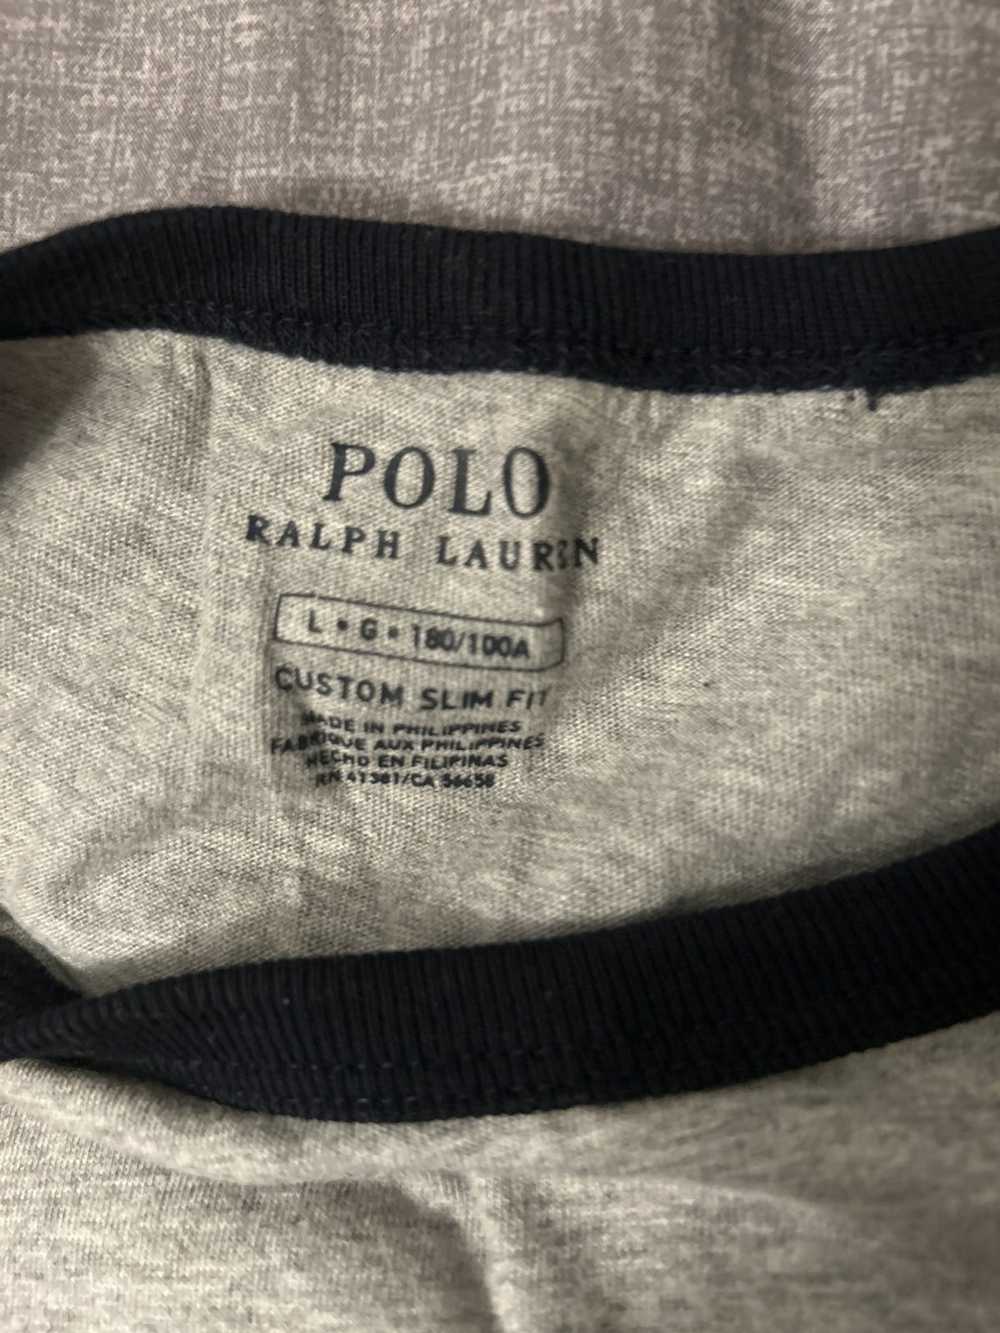 Polo Ralph Lauren Polo T Shirt - image 3